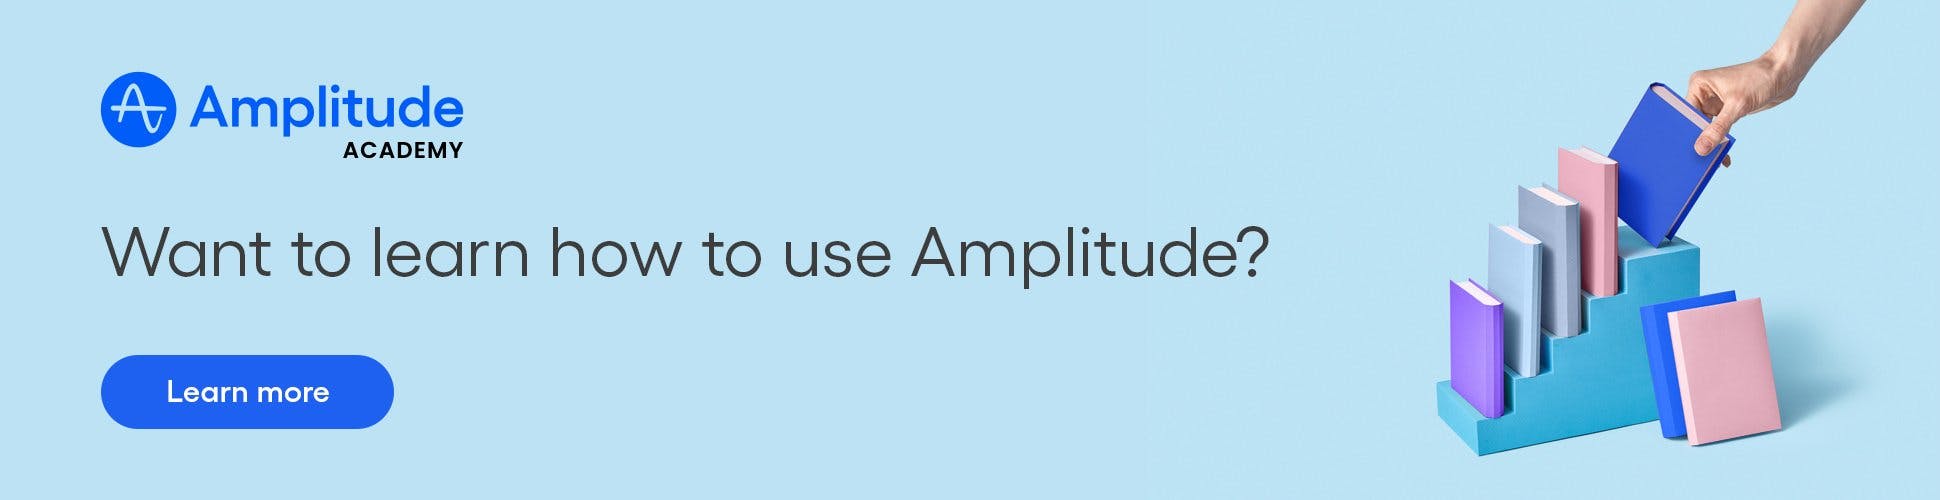 Amplitude Academy